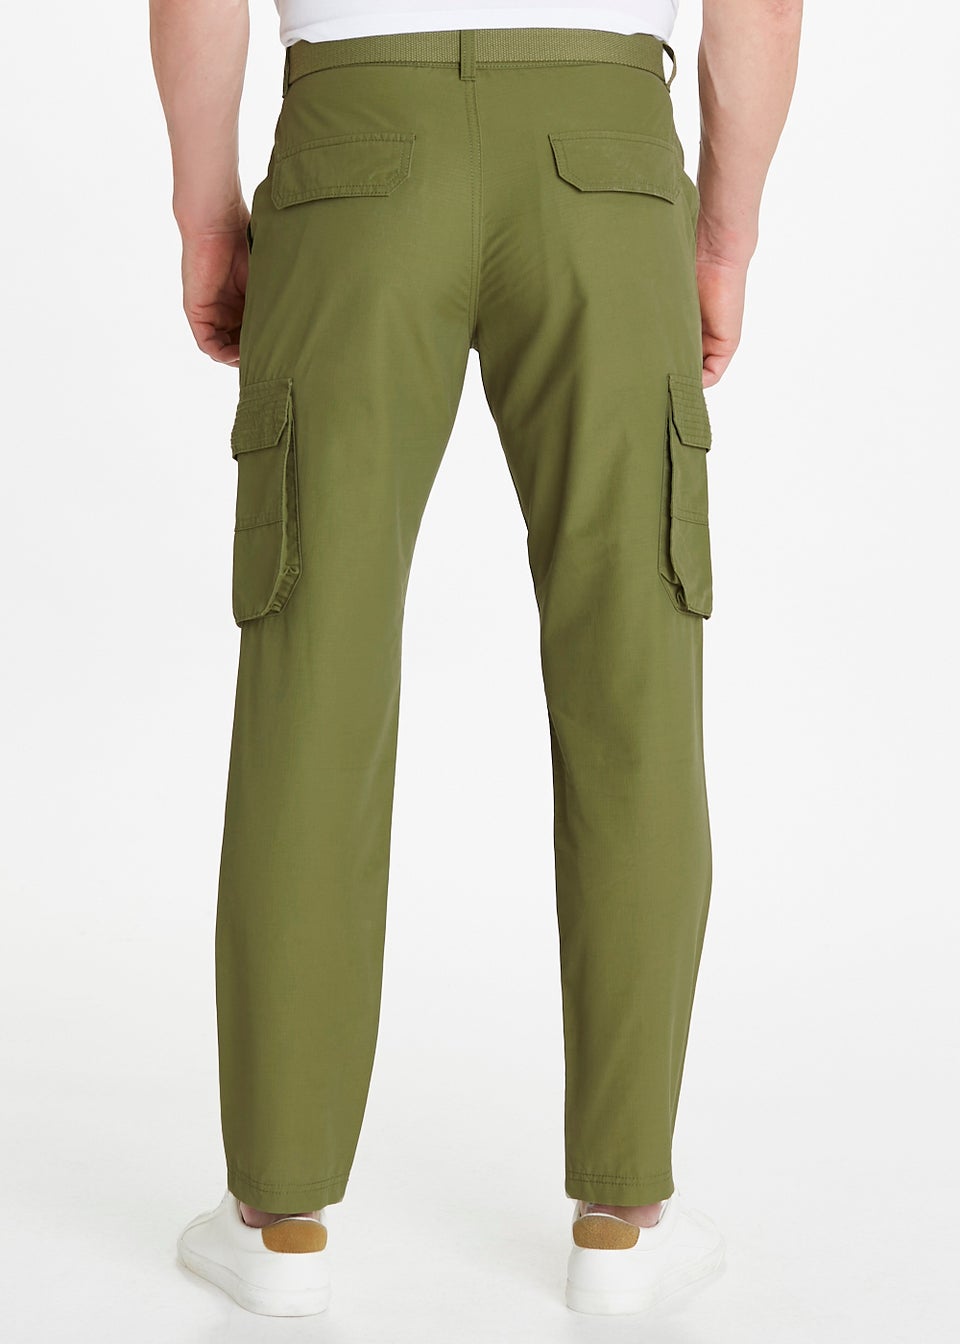 MATALAN, MENS NEW 100% Cotton Trousers, W30/L29, Slim Fit. Grey, (B8) £6.99  - PicClick UK